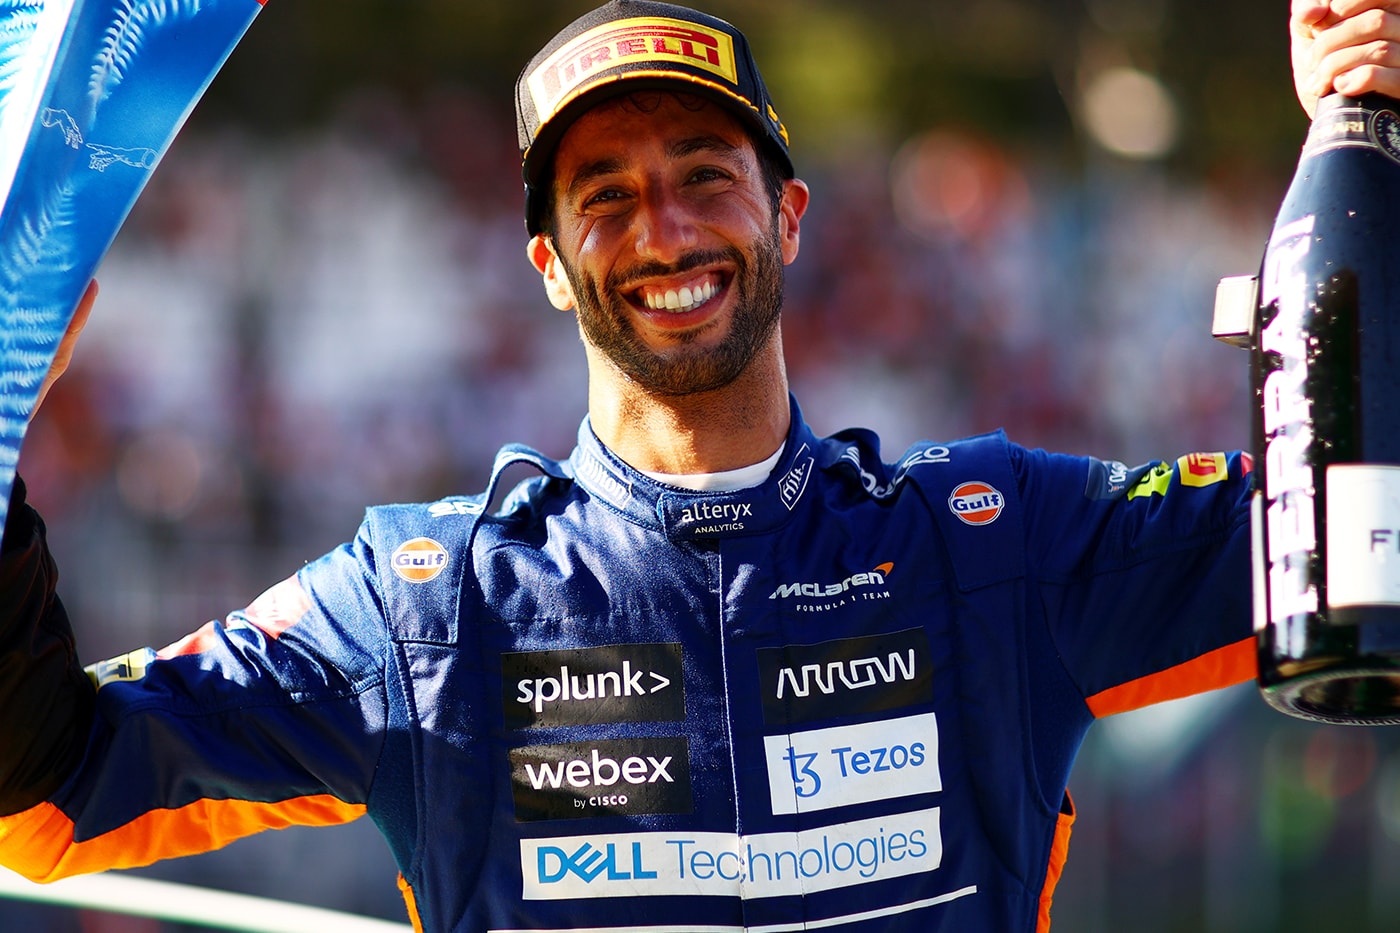 Daniel Ricciardo exit mclaren formula 1 team reportedly return join red bull f1 racing news info